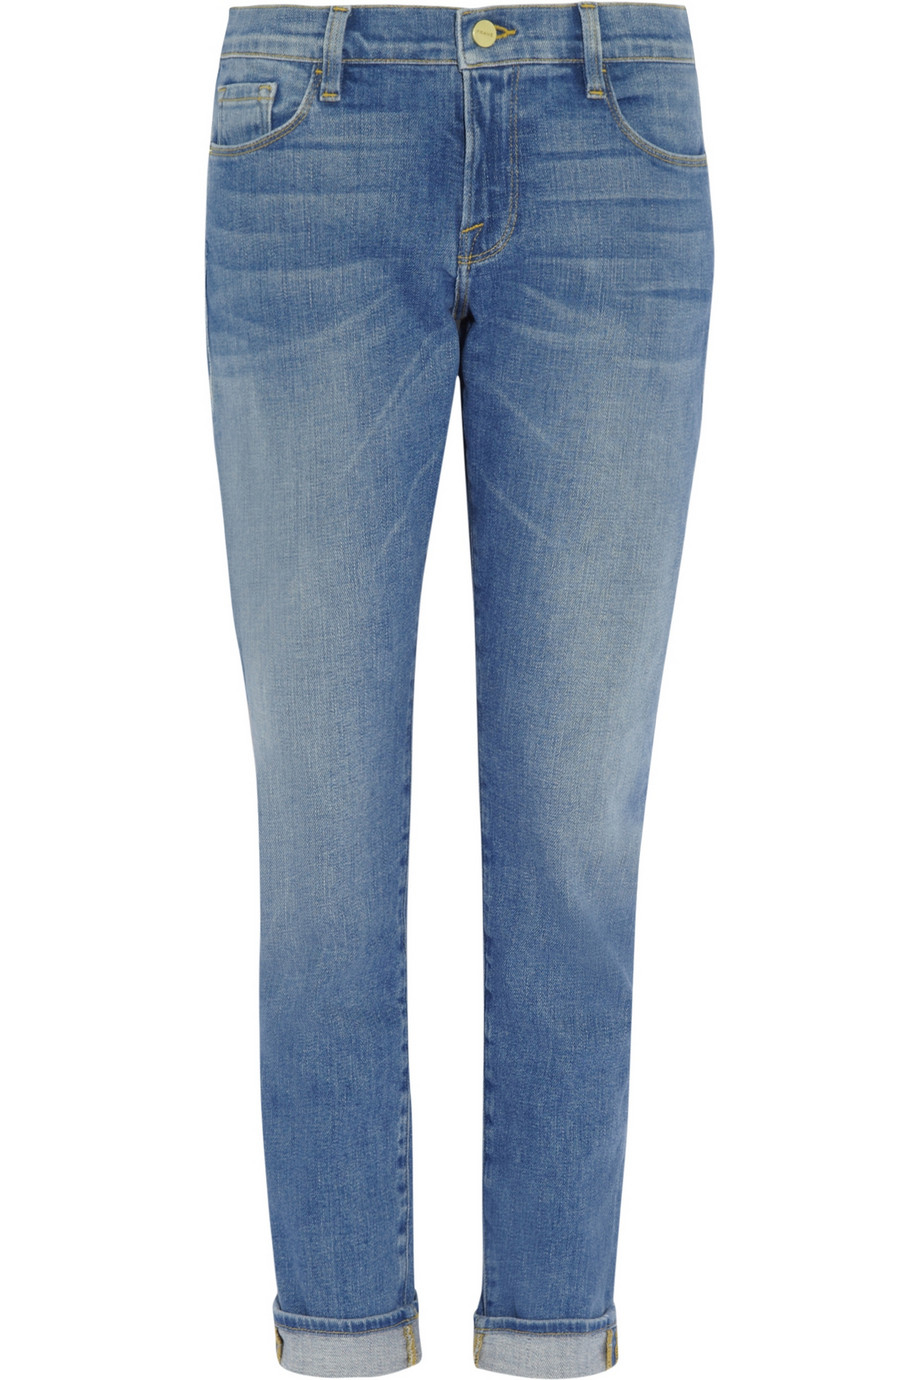 Frame Denim Le Garcon Mid-Rise Slim Boyfriend Jeans in Blue | Lyst